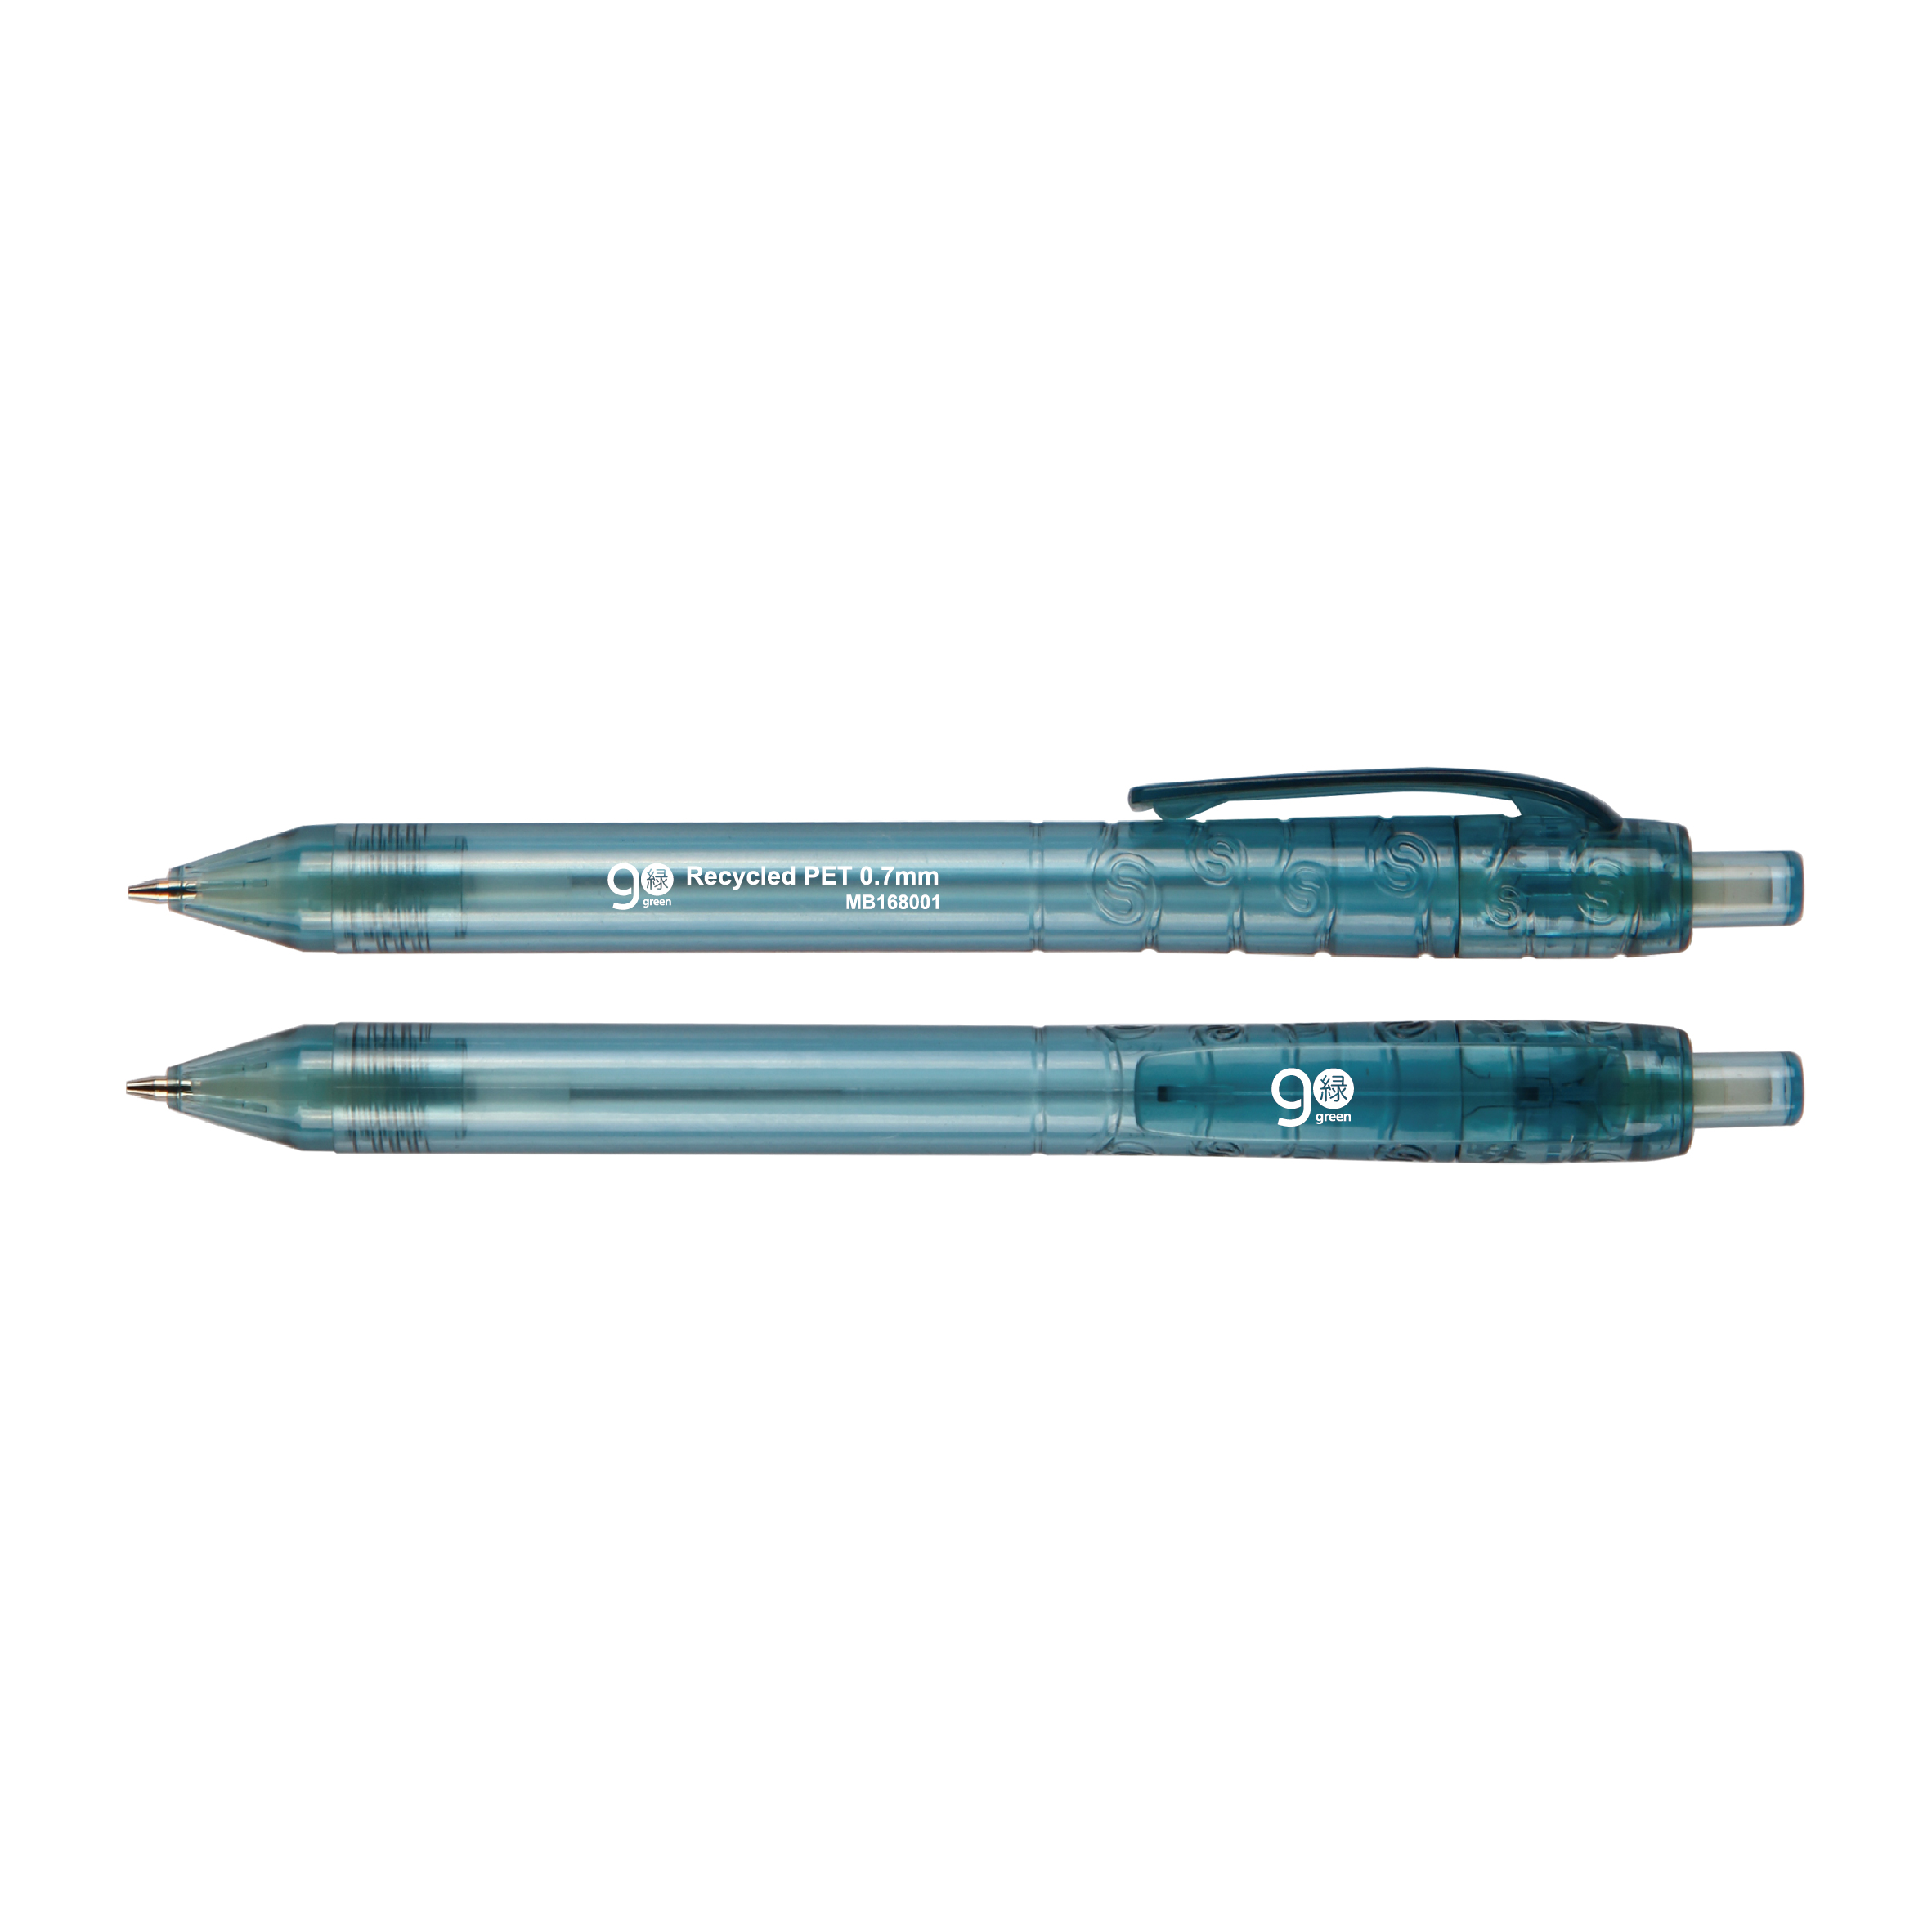 HB&2B Leads Flourish Fashion Design Mechanical Pencil with Eraser End